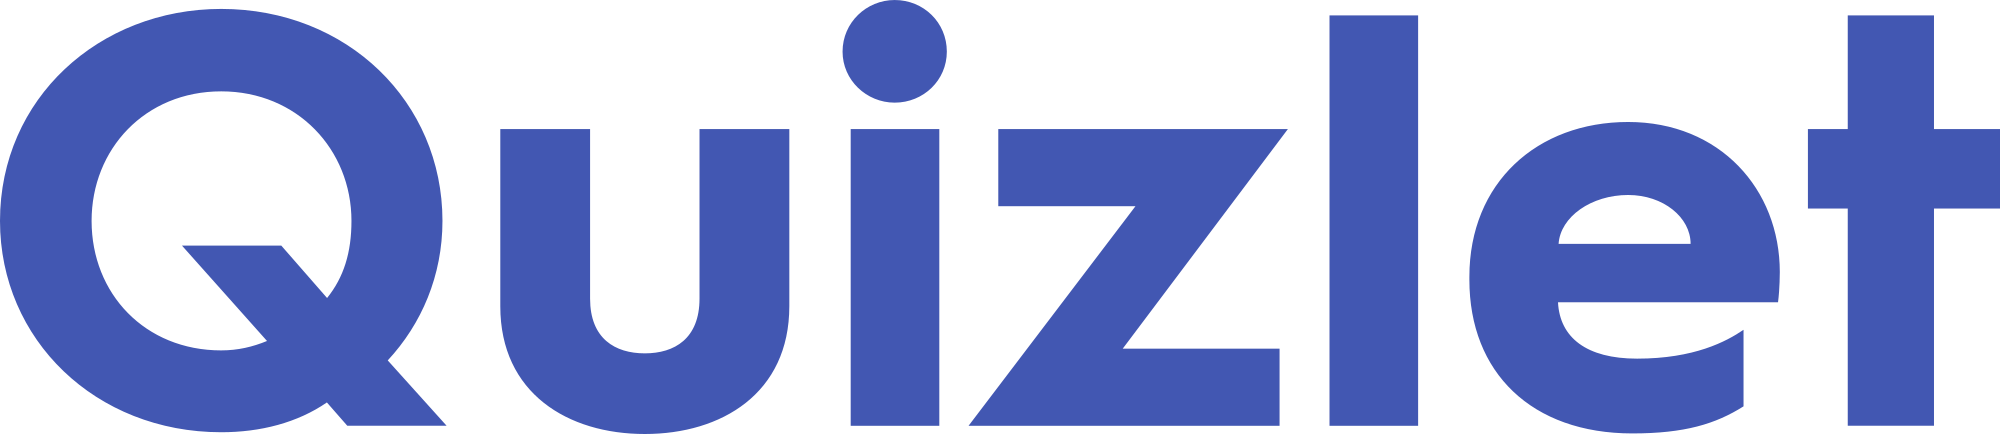 Quizlet Logo - Quizlet Logo.svg